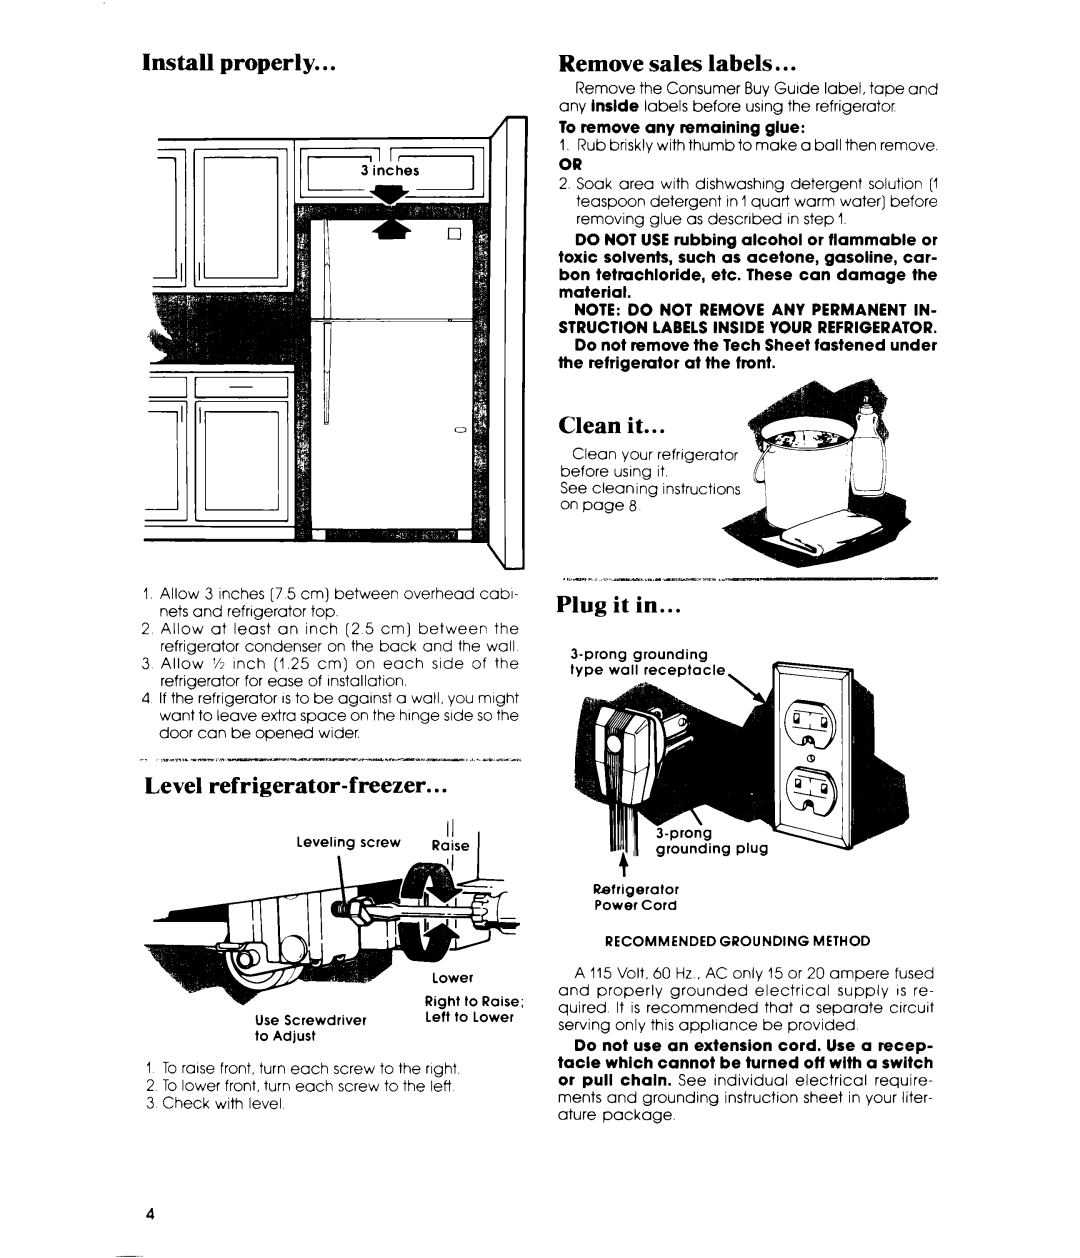 Whirlpool ETl8PKXP manual Install properly, sales labels, Clean it, Plug it in, Level refrigerator-freezer, Remove 